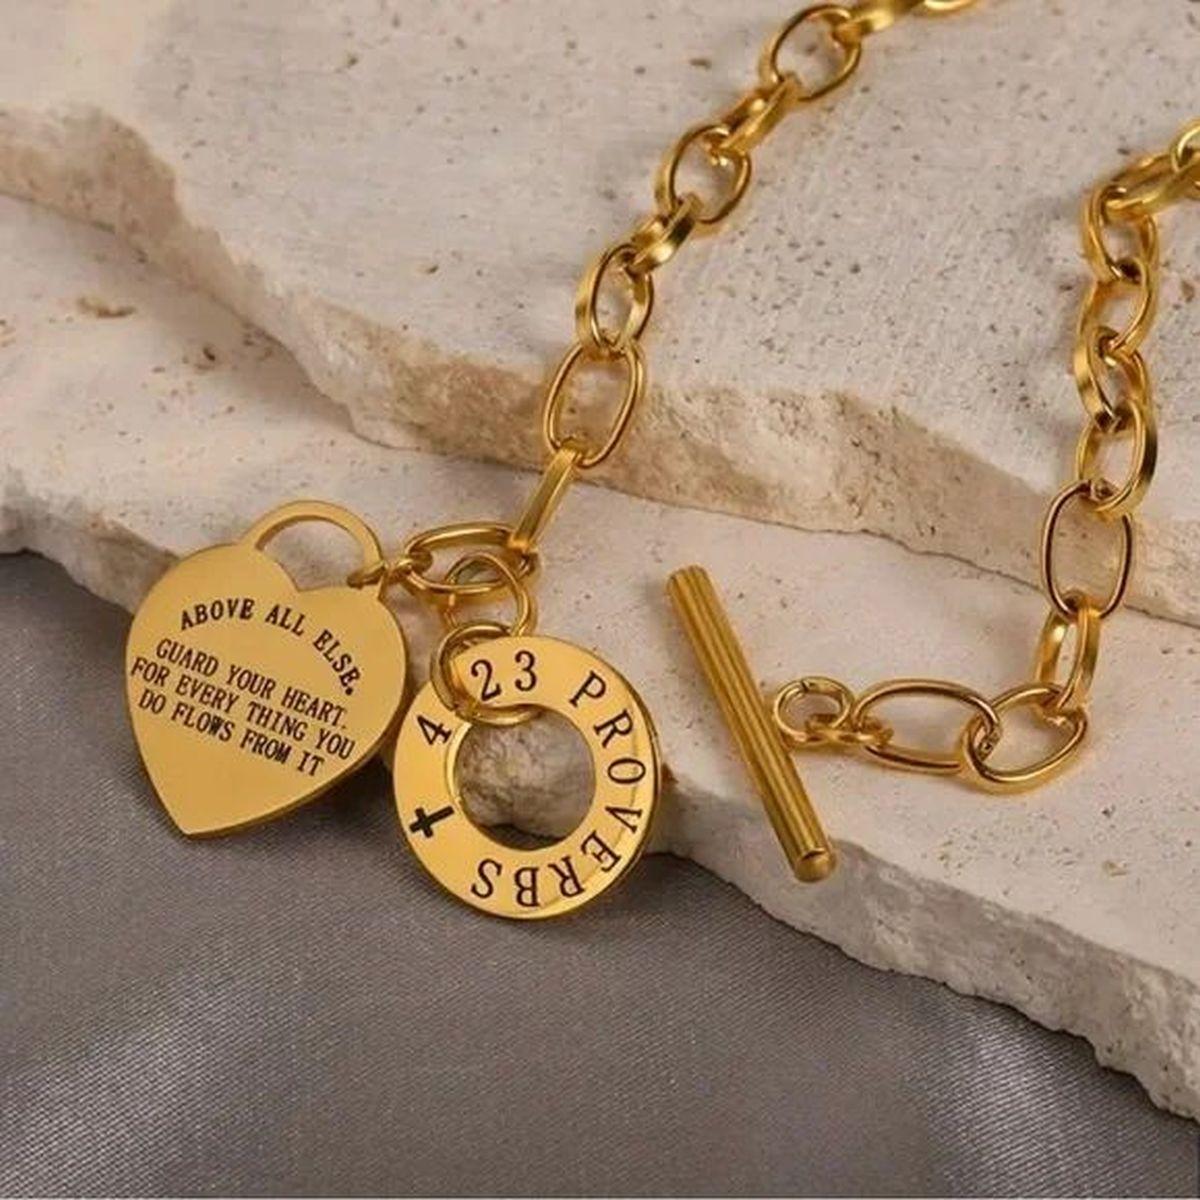 Women's Vintage Golden Heart Lock Pendant Toggle Link Necklace For Sale